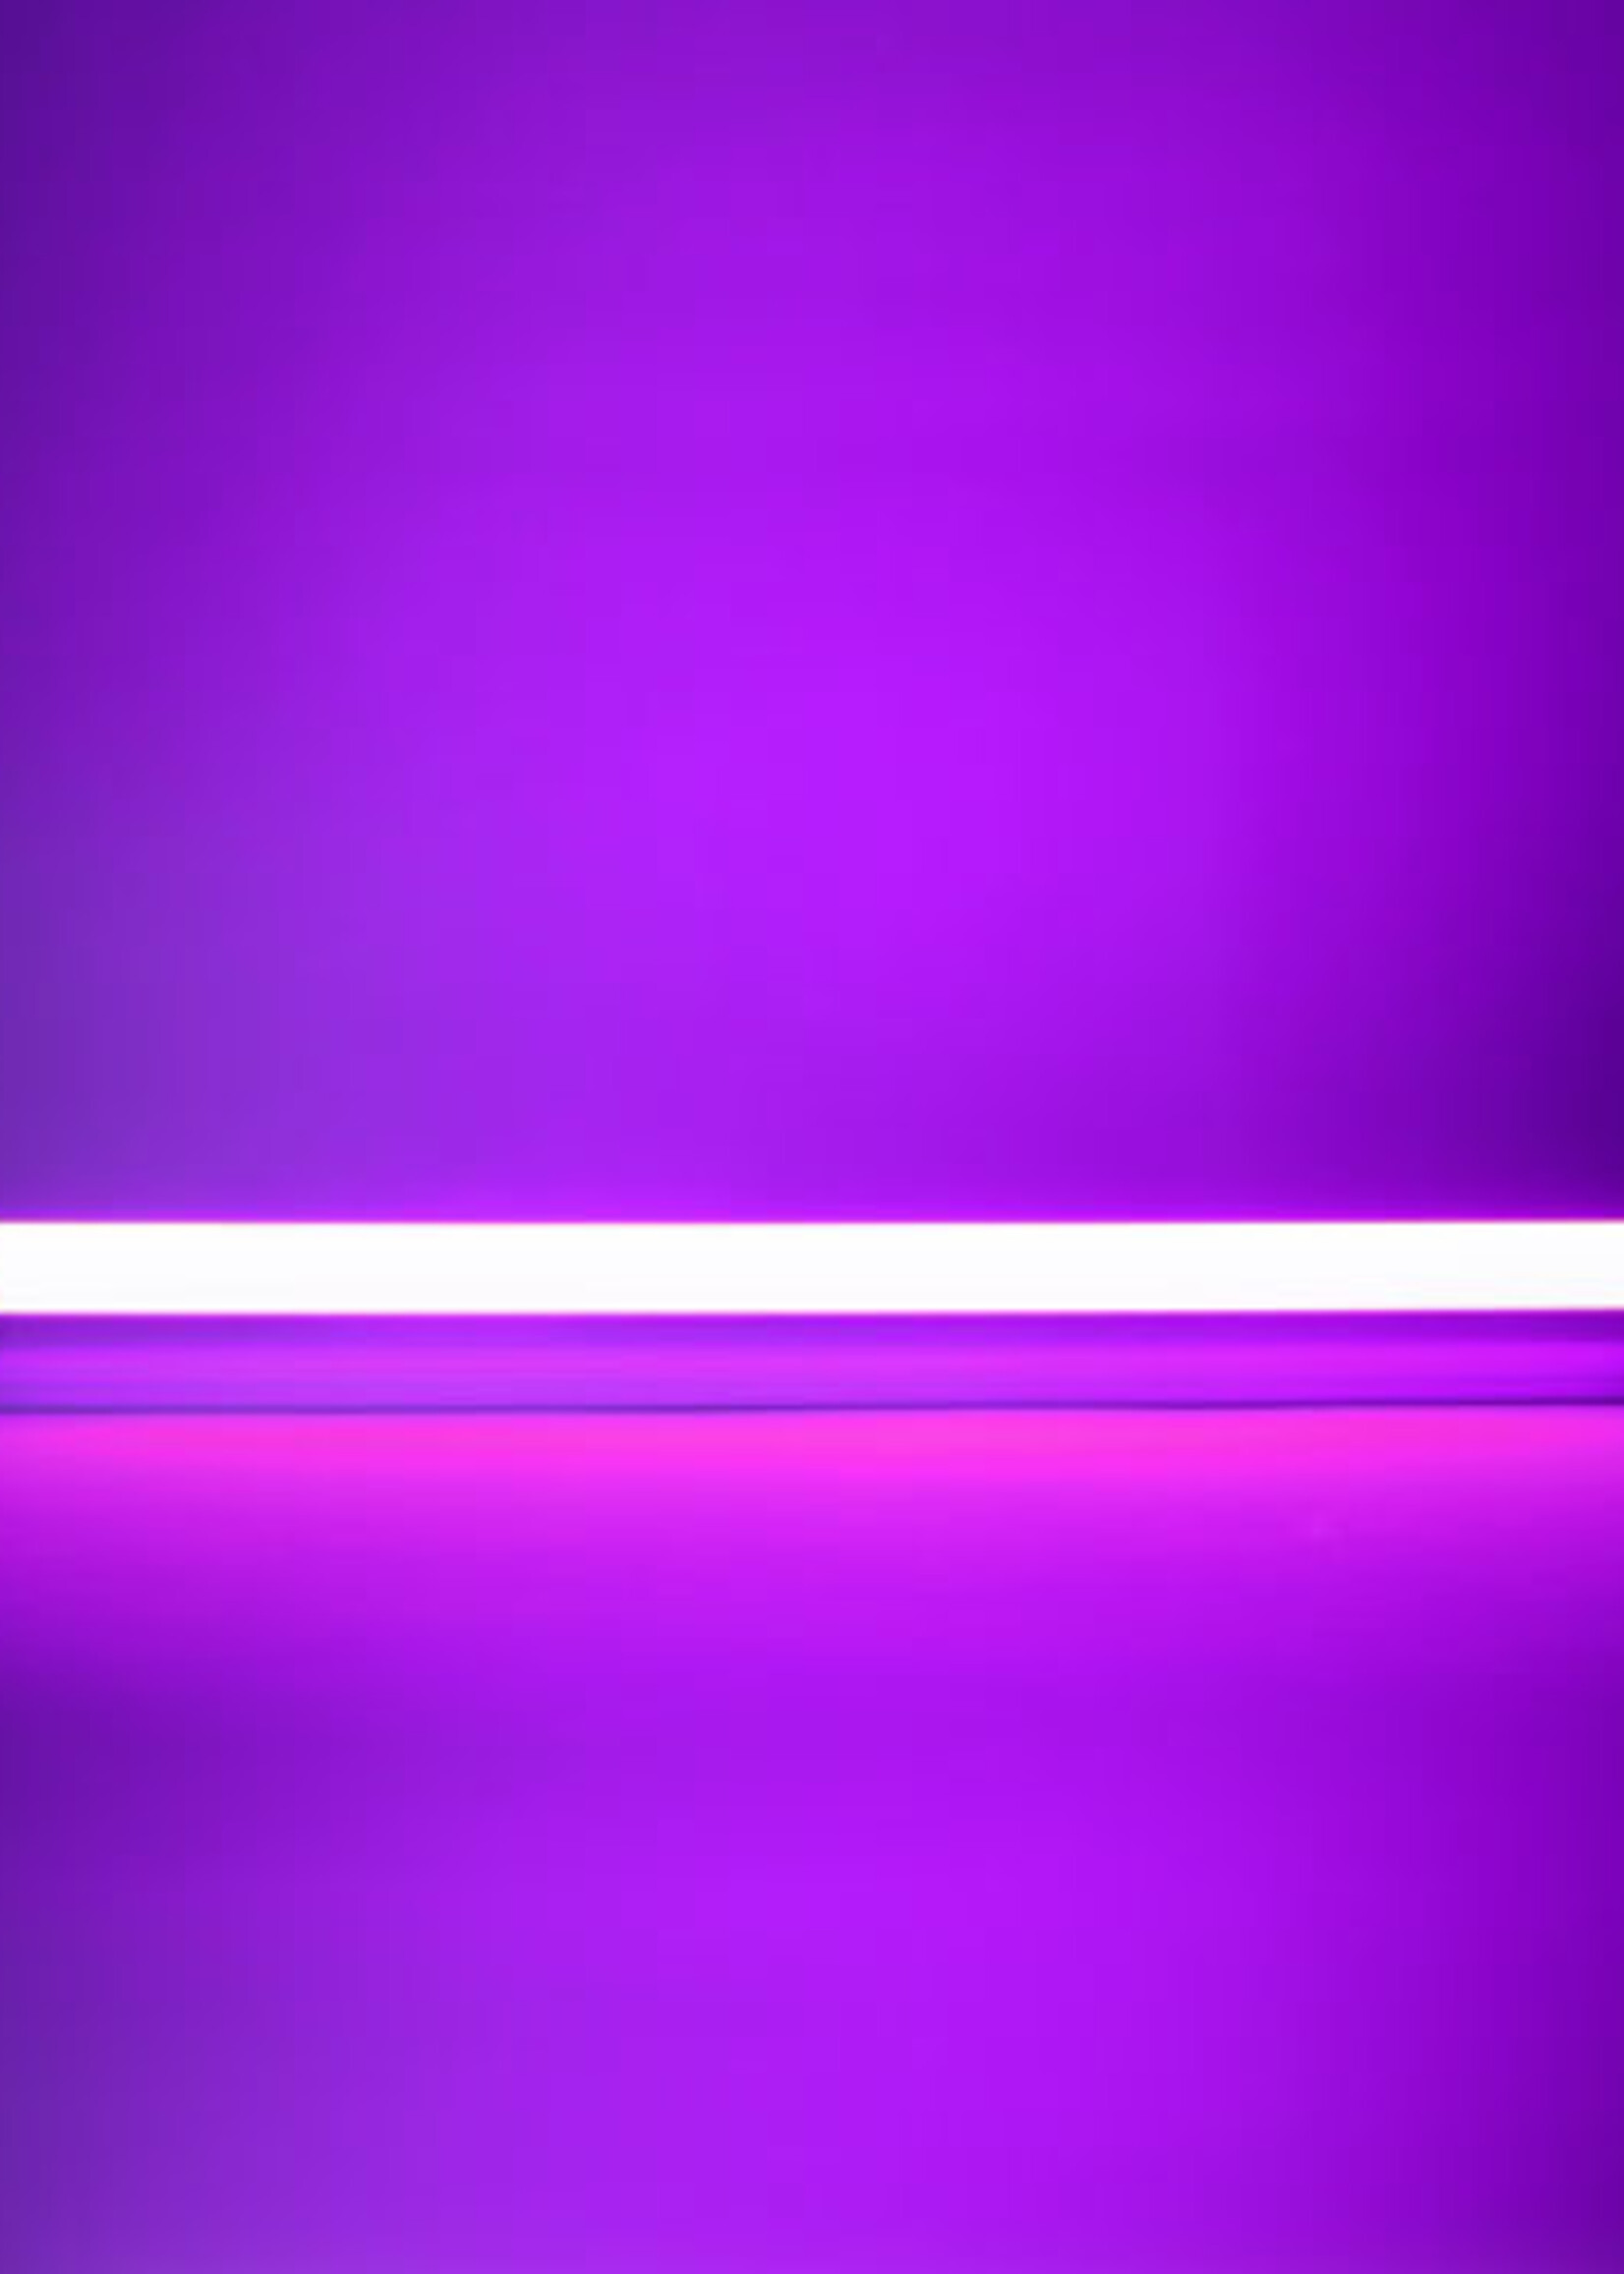 LEDWINKEL-Online WiFi LED Tube Light 90cm RGB Colored Light 14W